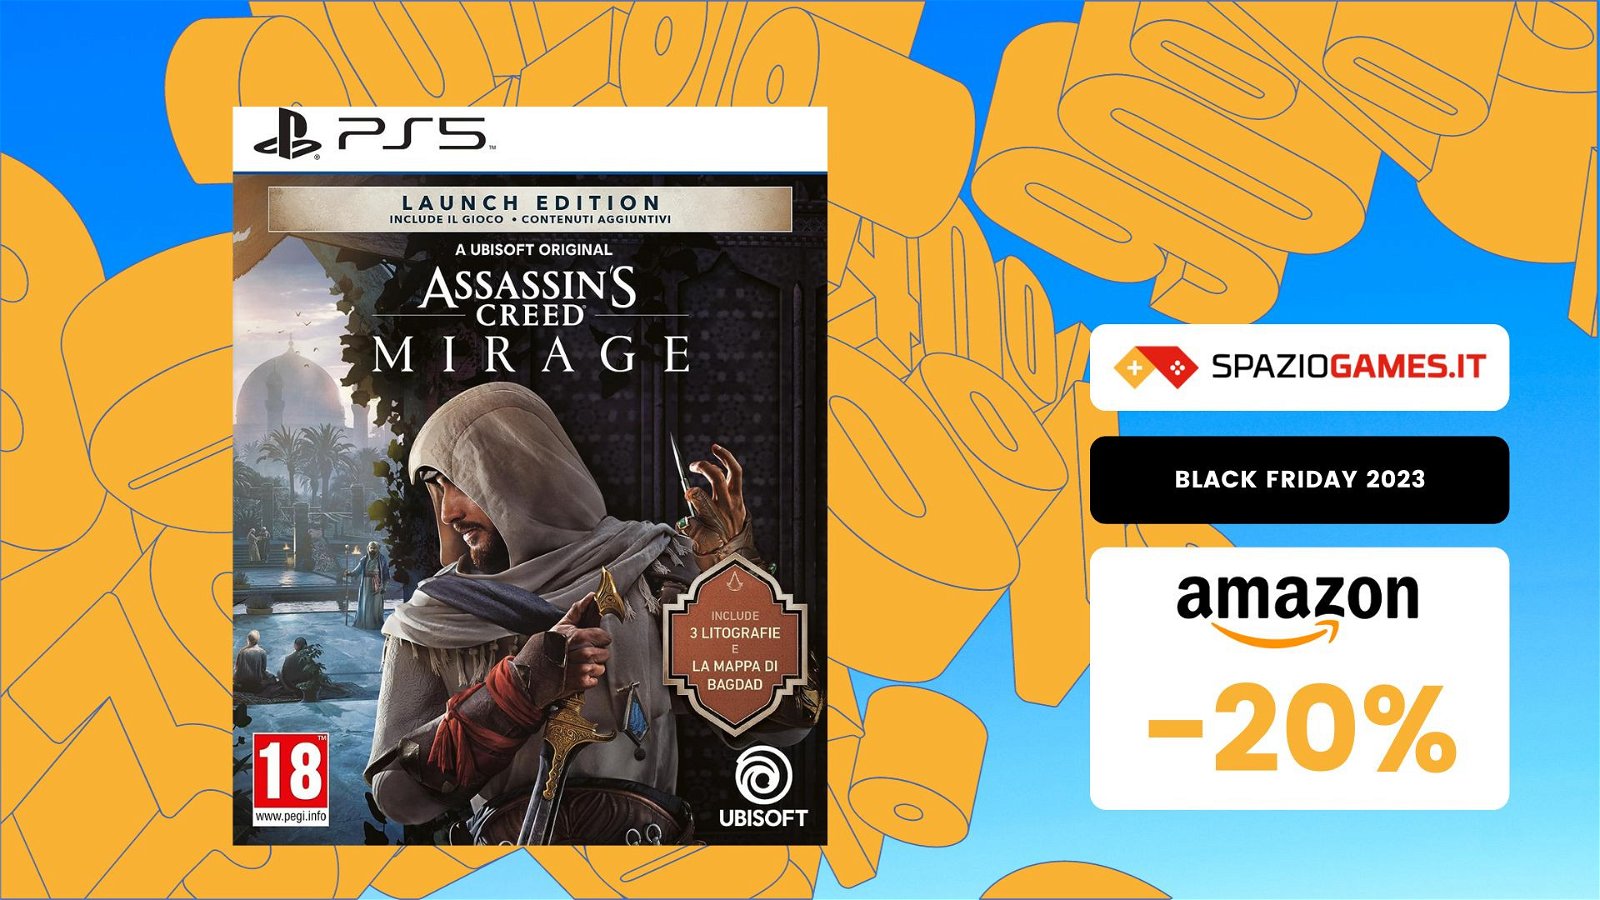 https://cdn.spaziogames.it/storage/media/2023/11/6353/Assassin's-Creed-Mirage-PS5-Black-Friday-Amazon-2023.jpg